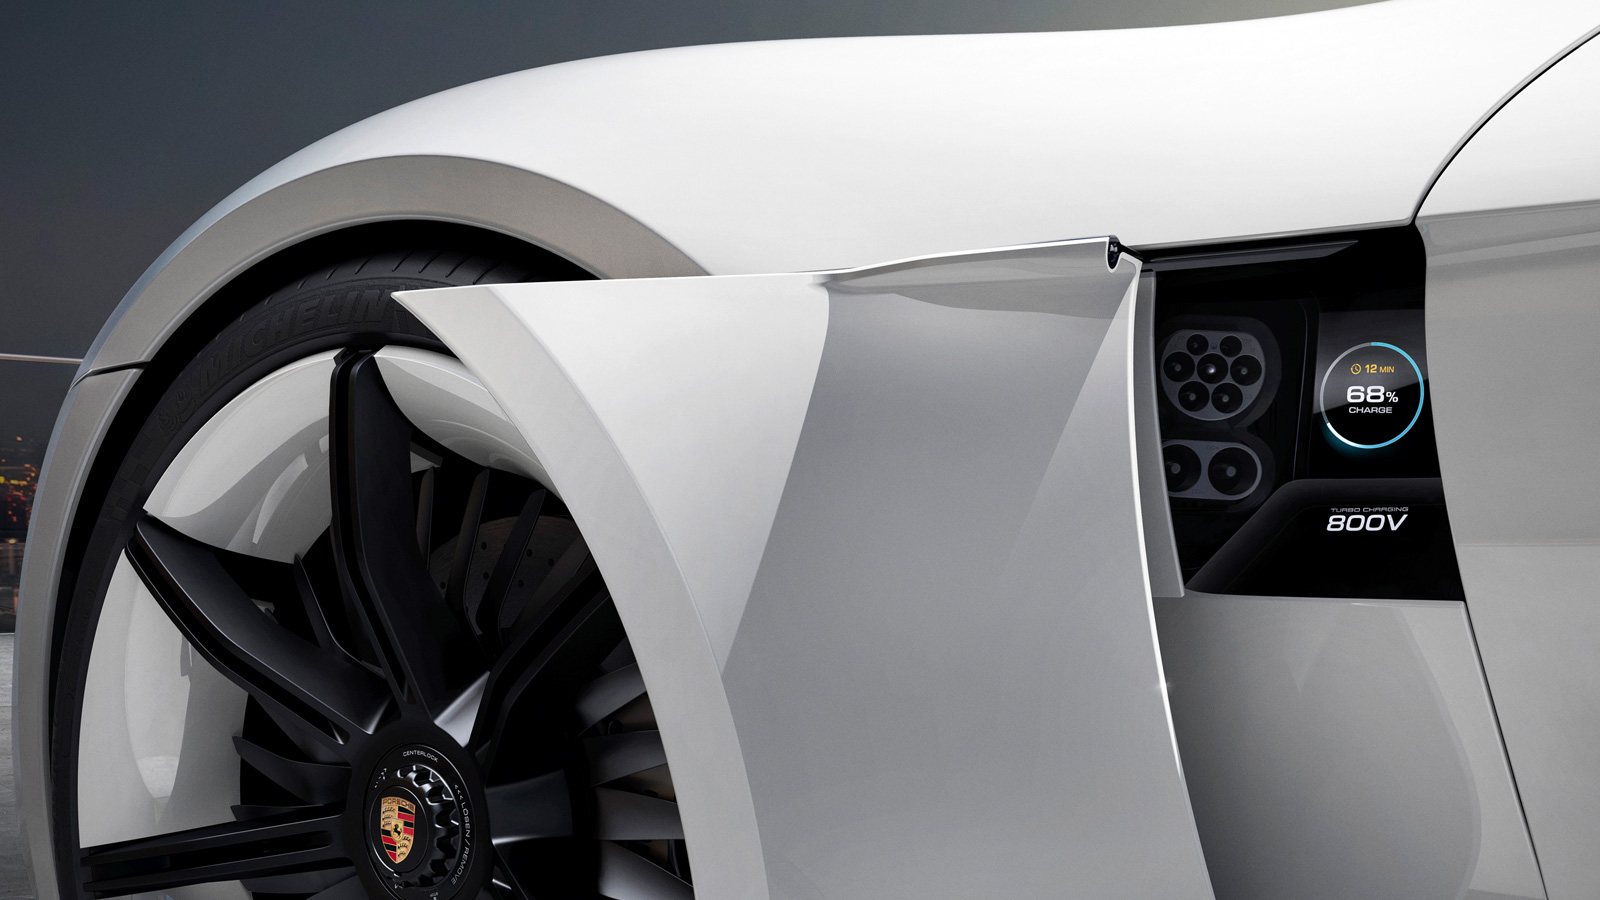 Porsche's Mission E sports sedan 2020 charging port fender sliders